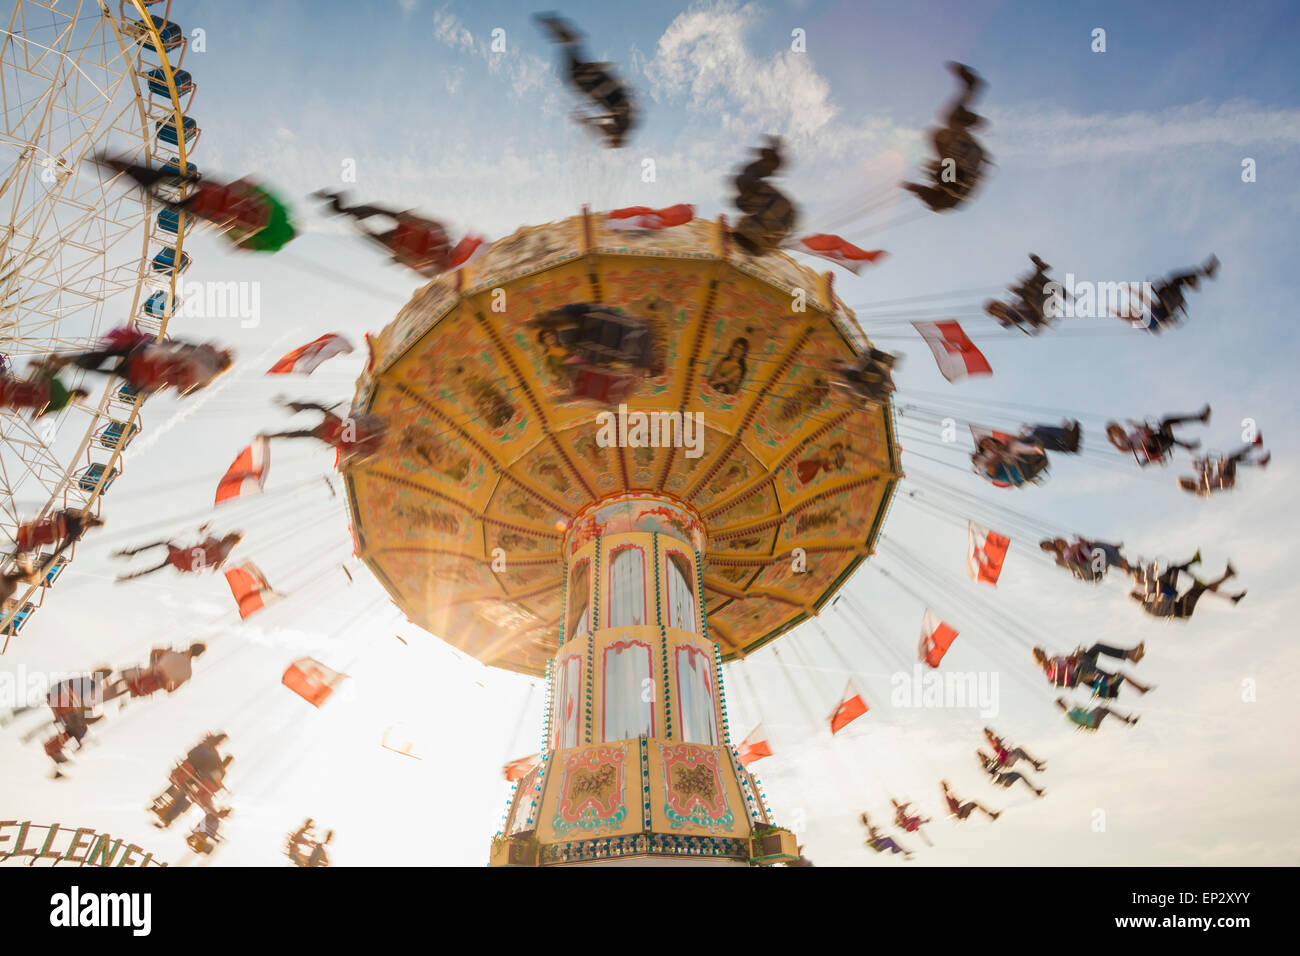 Germania, Stoccarda, ruota panoramica Ferris e chairoplane al Cannstatter Wasen fiera Foto Stock